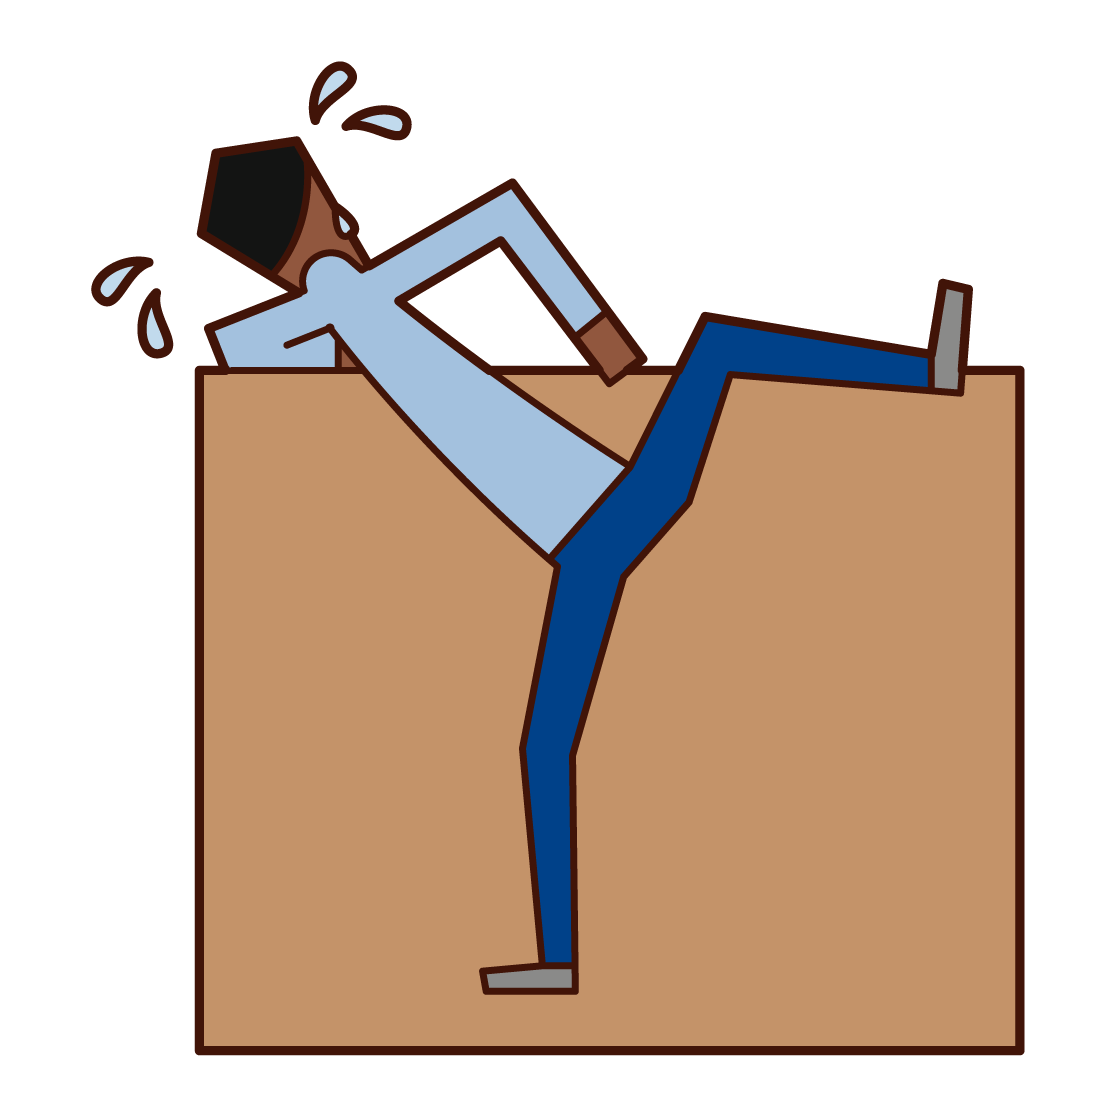 Illustration of a man climbing a wall